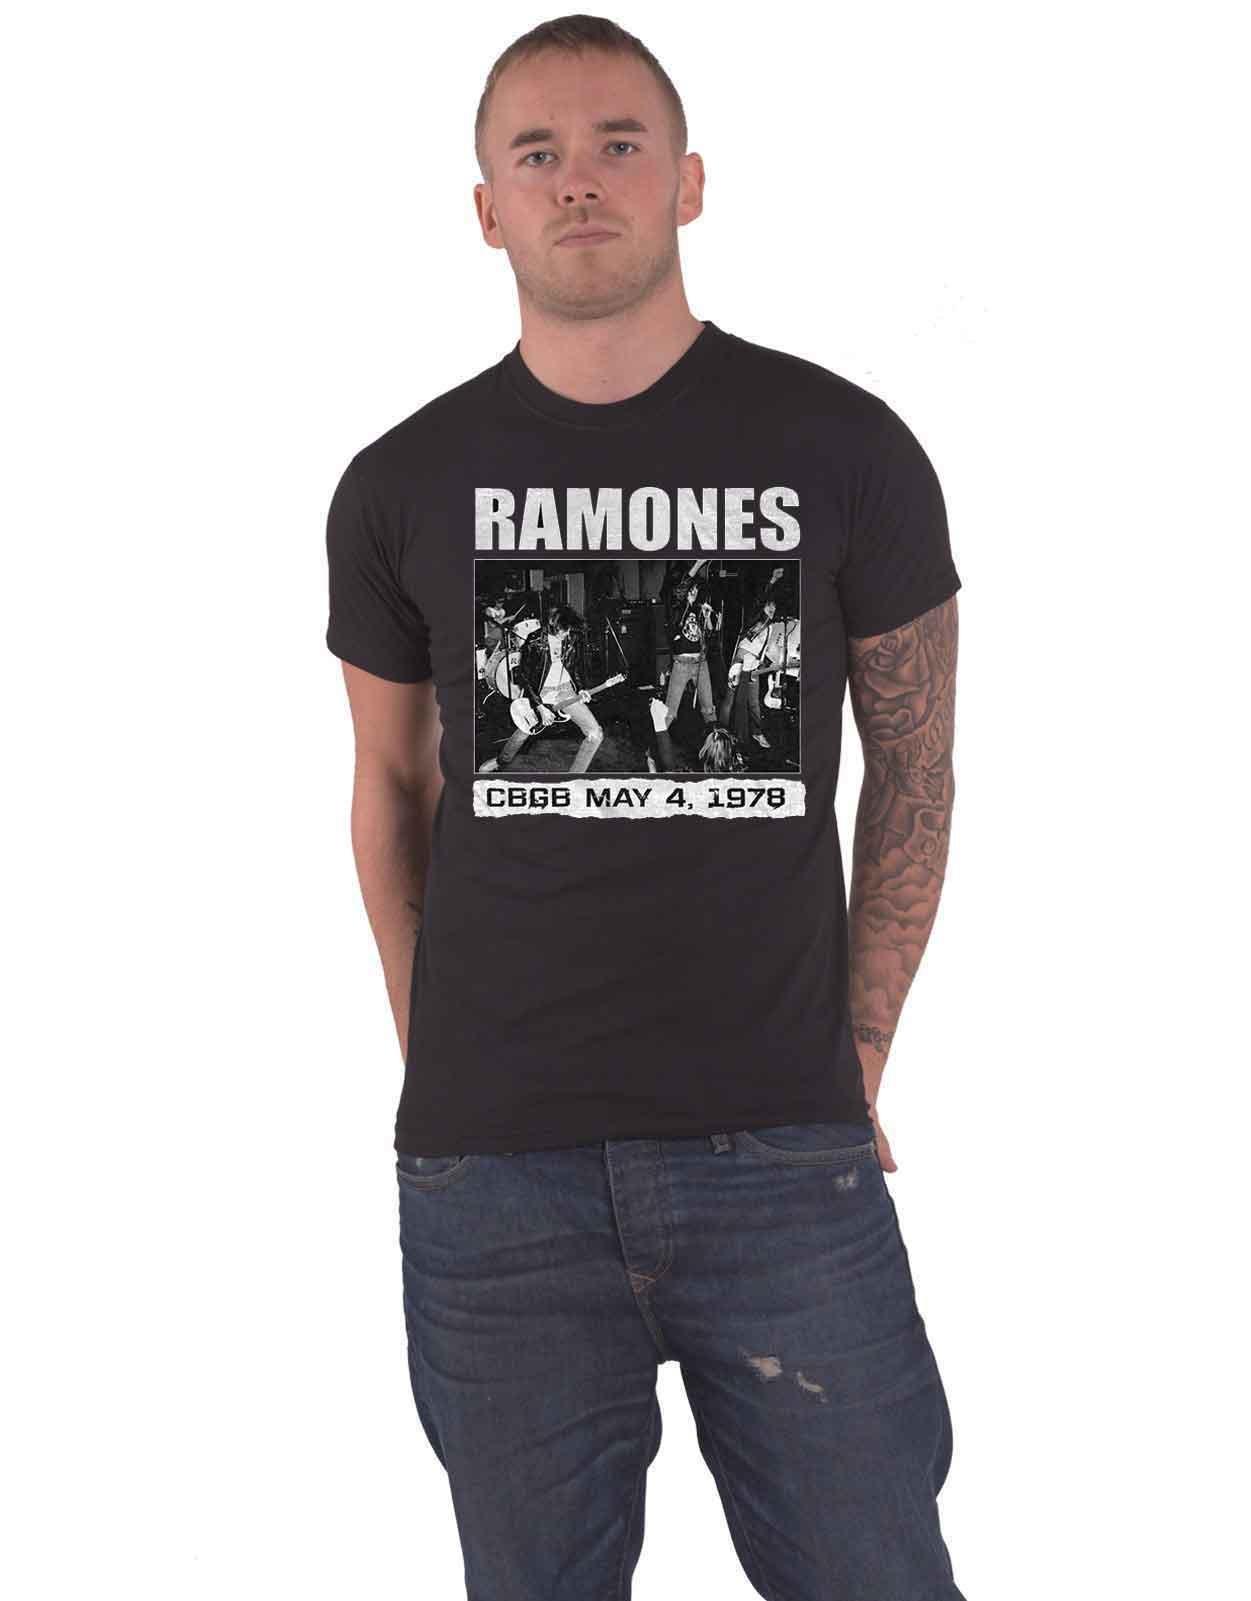 officially licensed cbgb Футболка CBGB 1978 года Ramones, черный